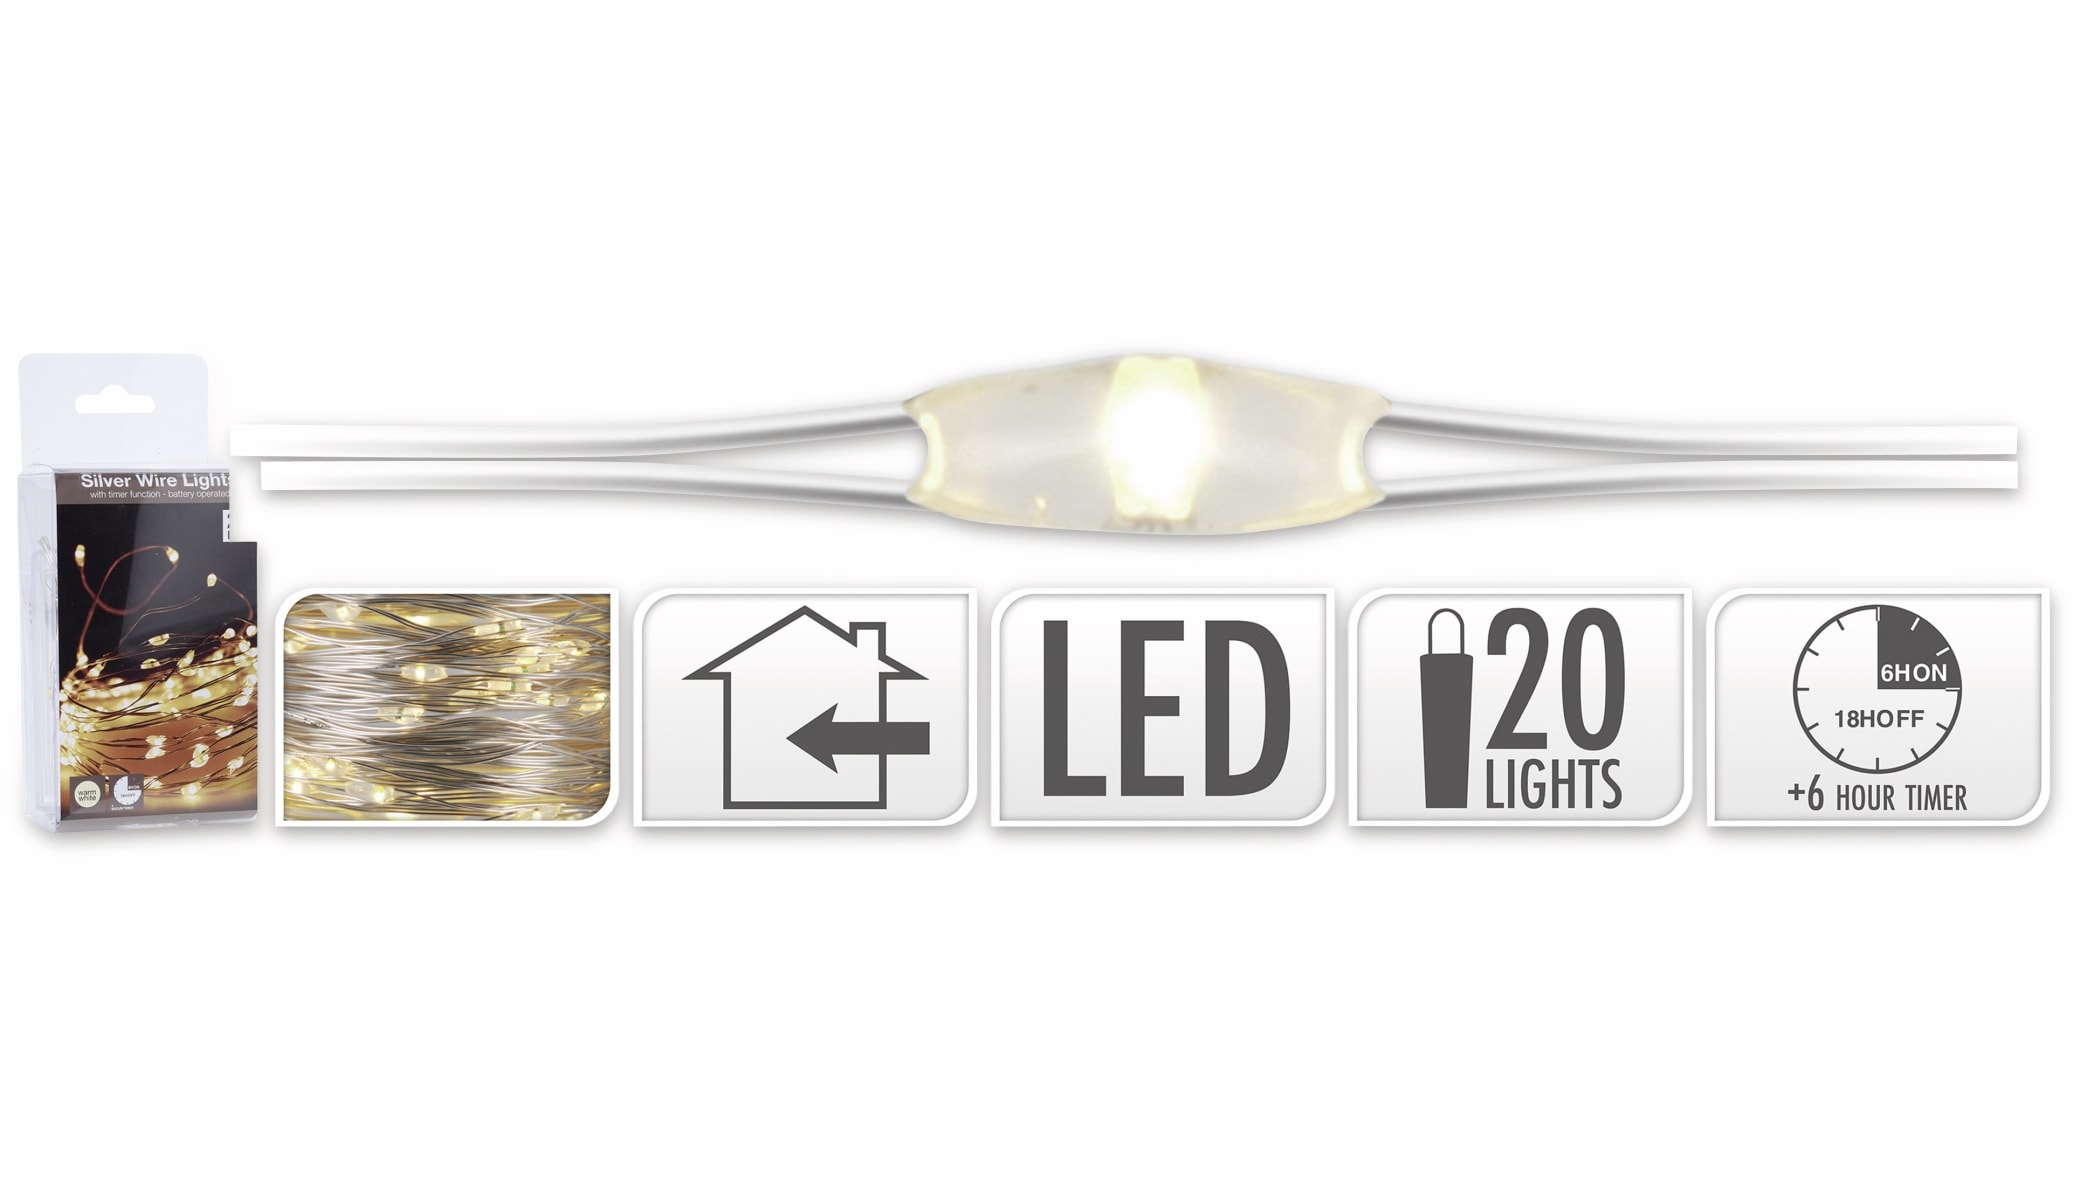 LED-Lichterkette, Silberdraht, 20 LEDs, warmweiß, Batteriebetrieb, Timer